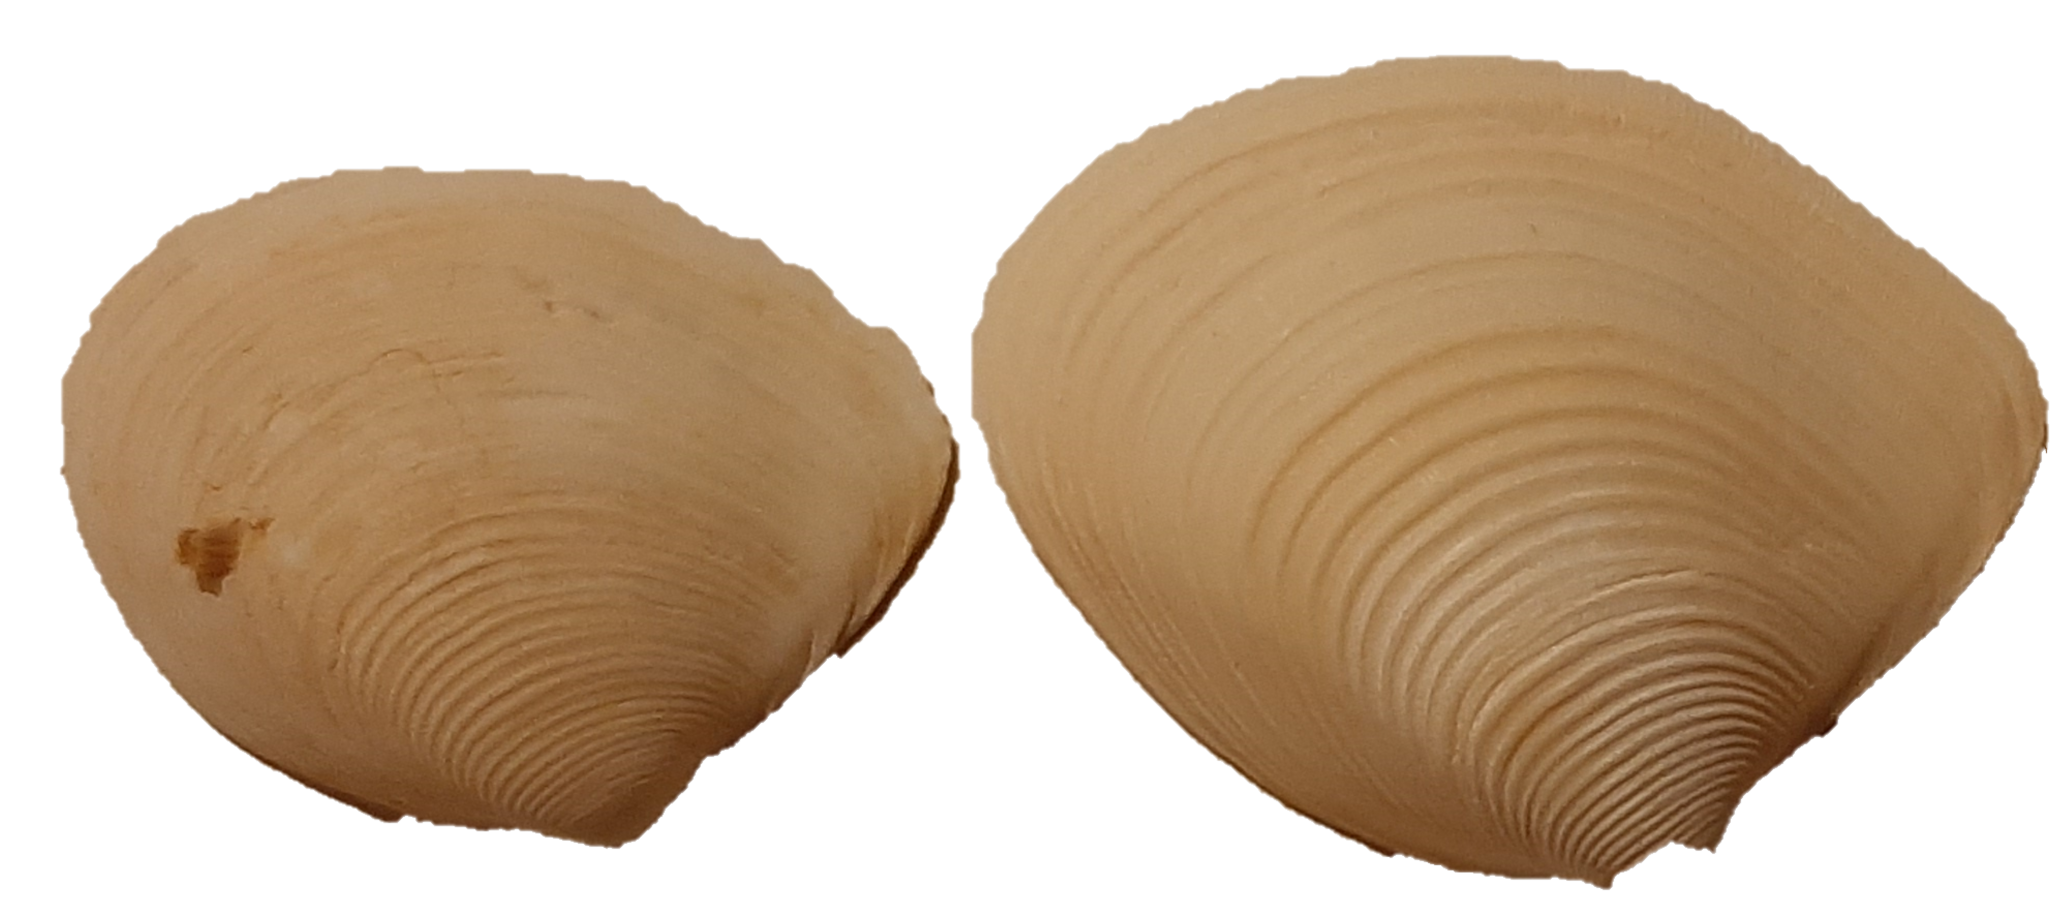 Seashell PNG HD Quality